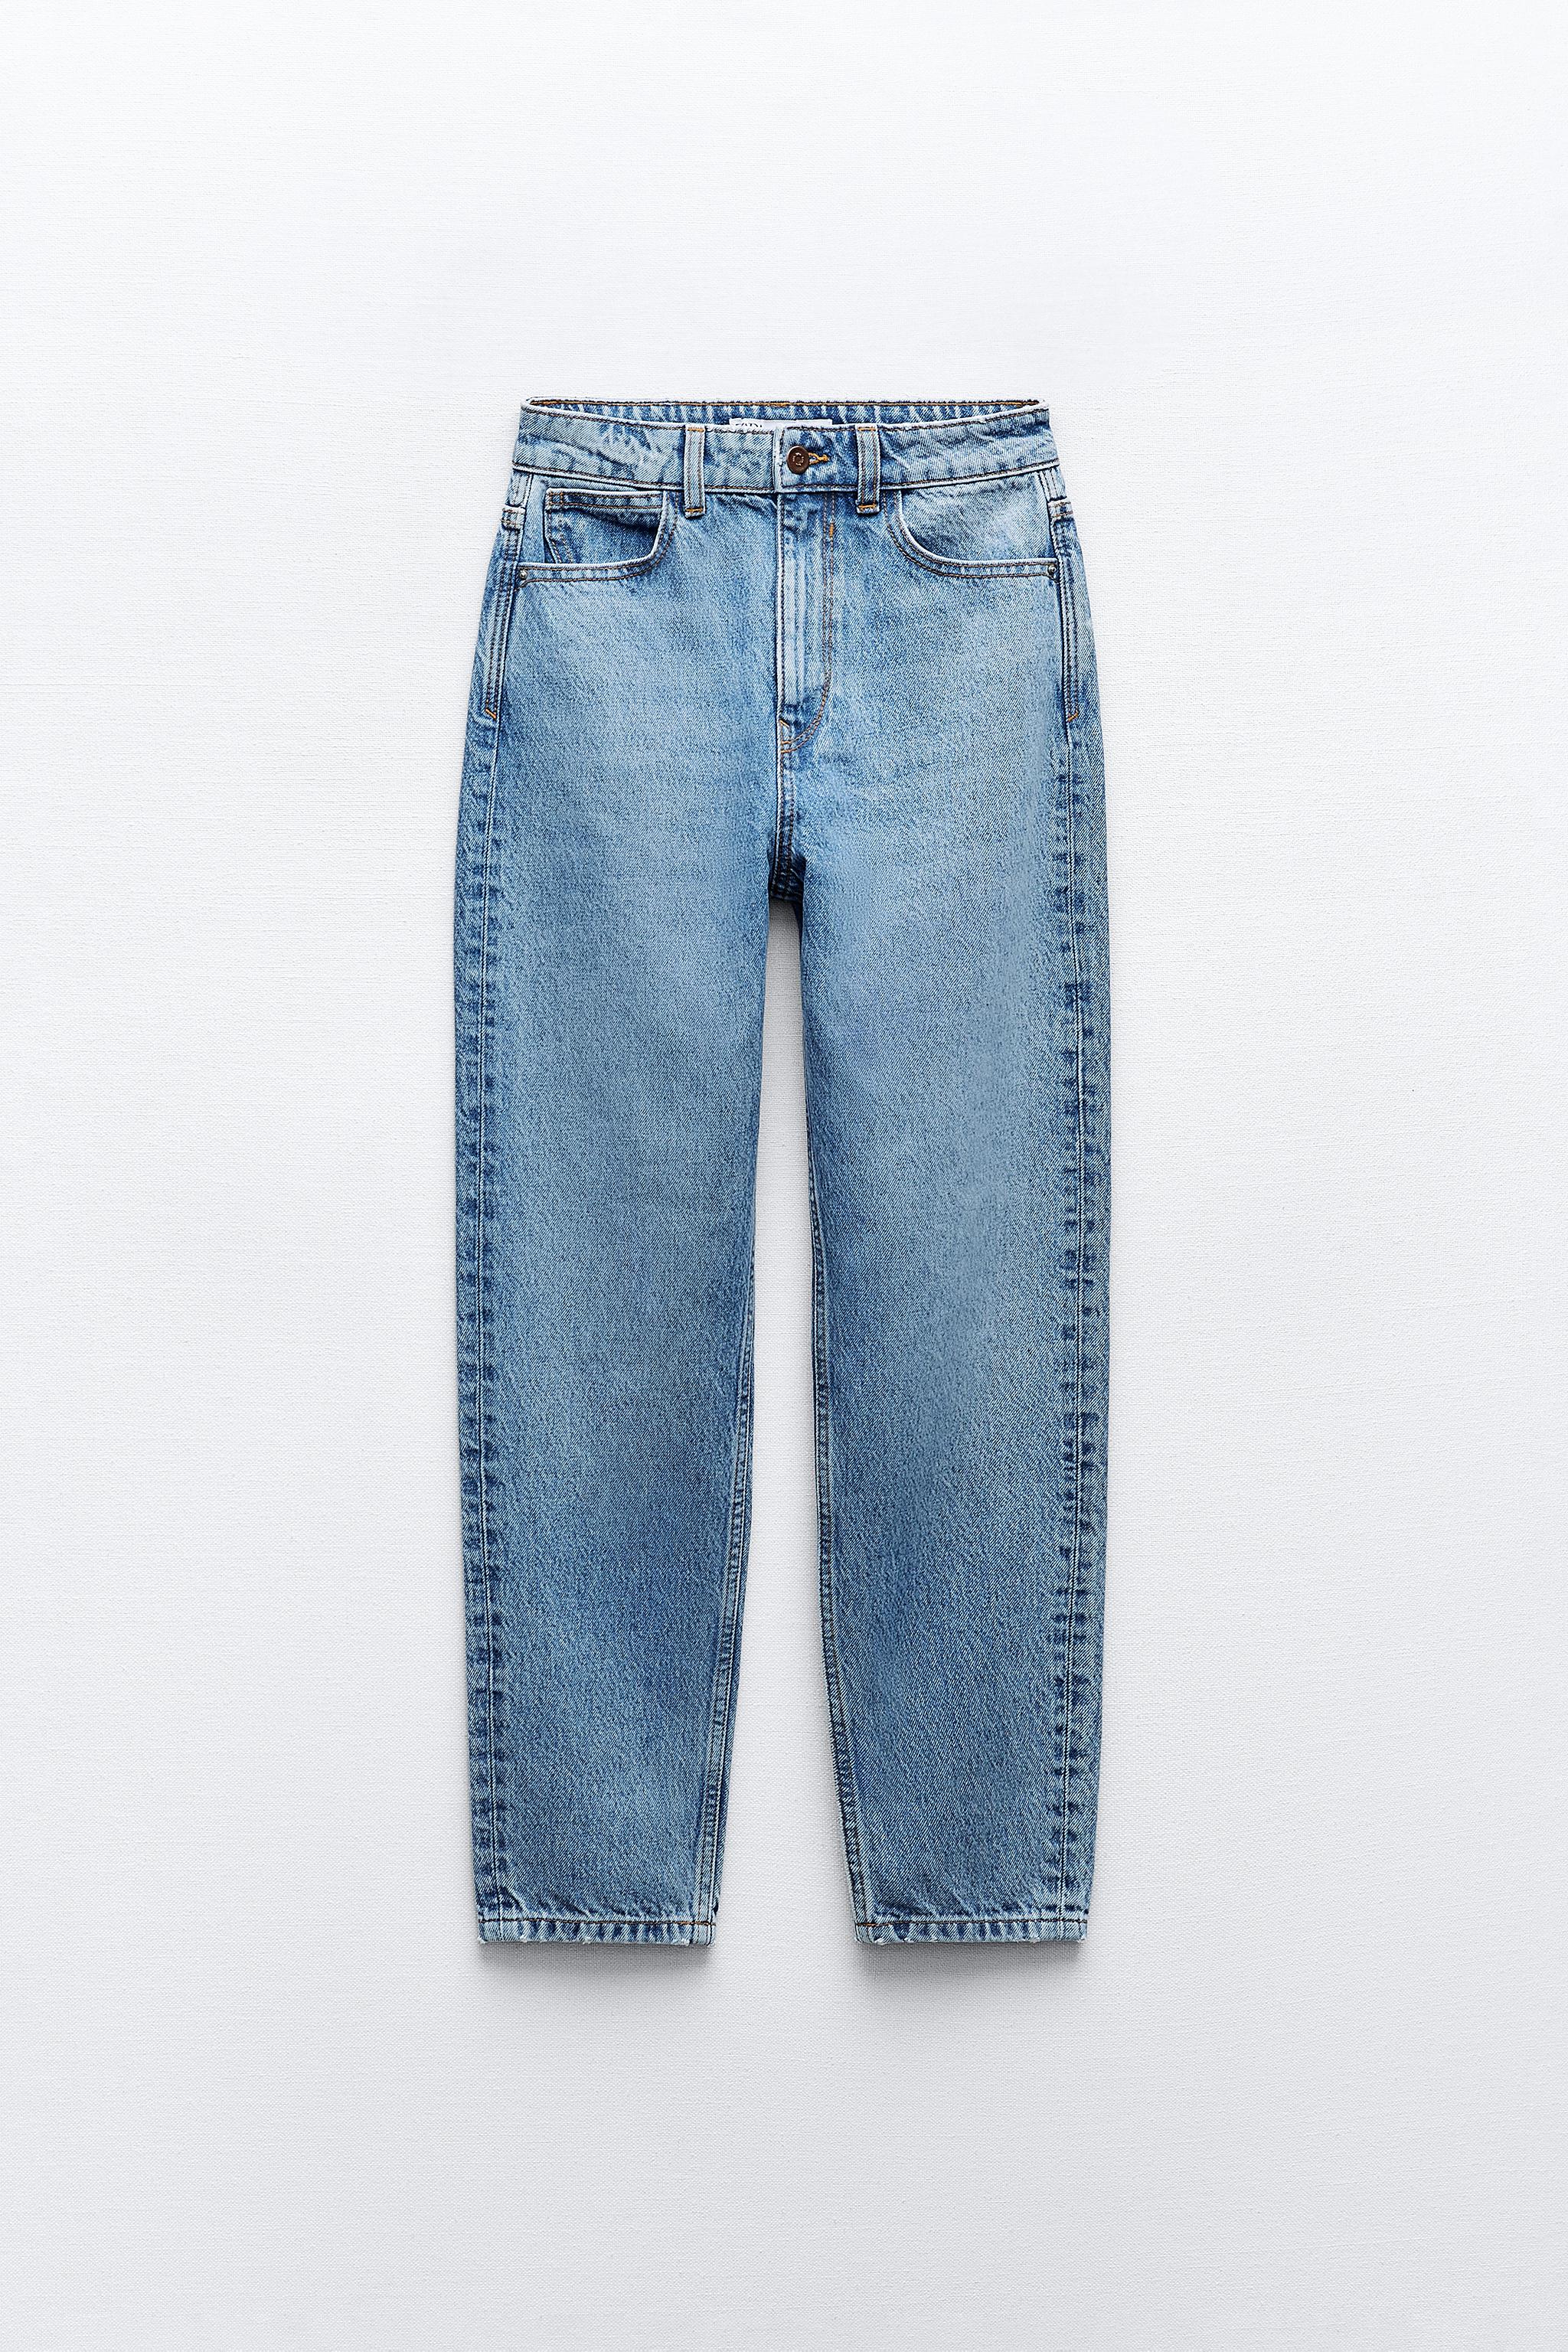 Z1975 MOM-FIT HIGH-WAIST 高腰牛仔褲- 中藍色| ZARA Hong Kong SAR 